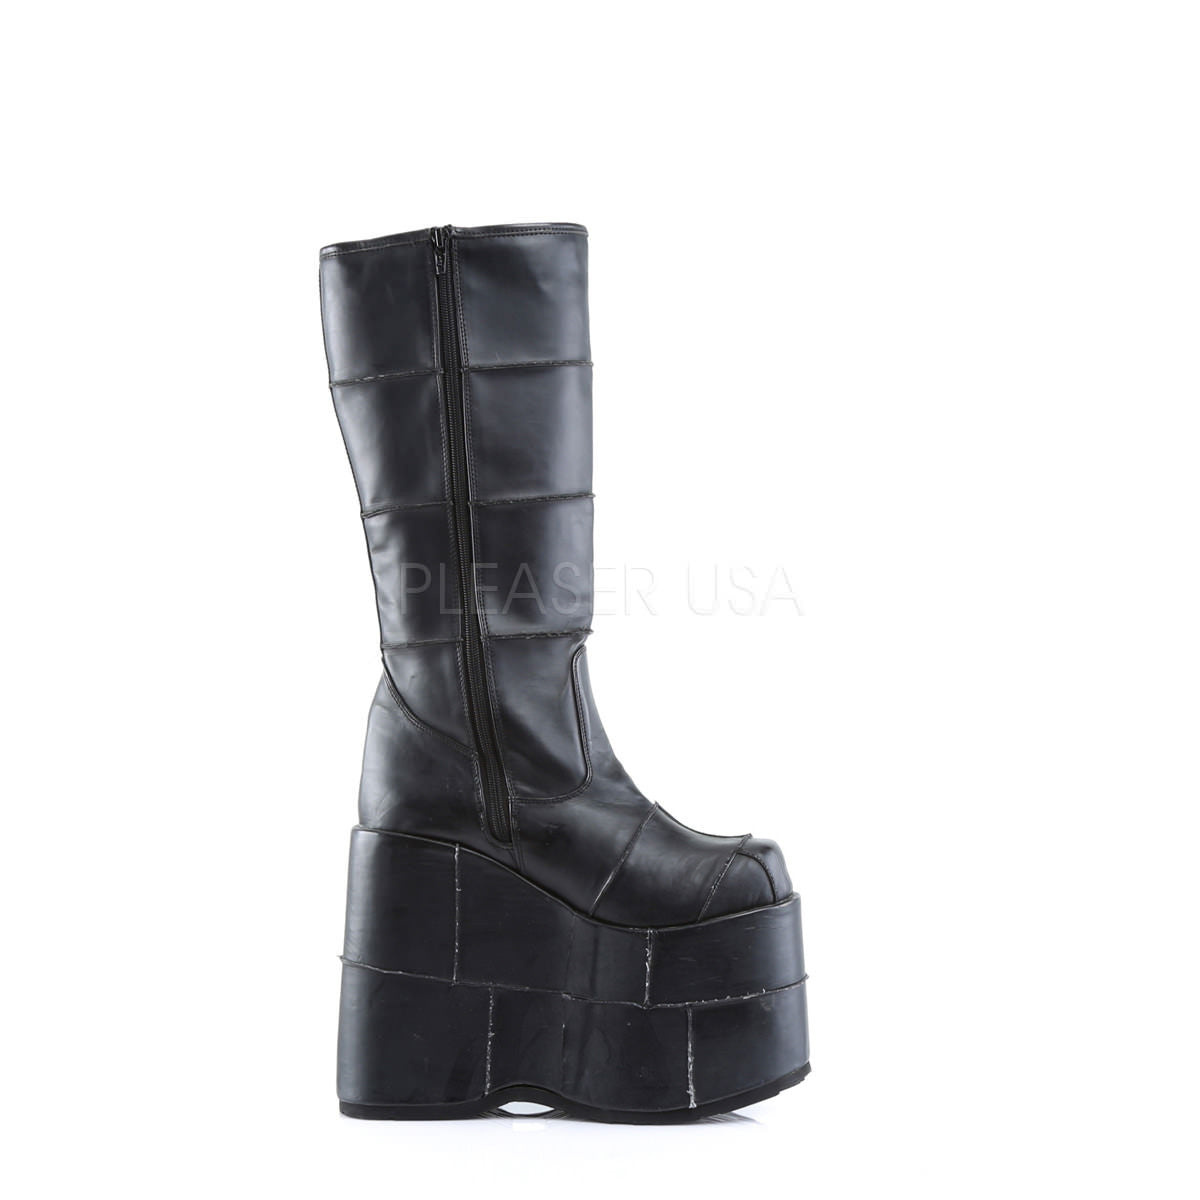 DEMONIA STACK-301 Men's Black Pu Vegan Boots - Shoecup.com - 3